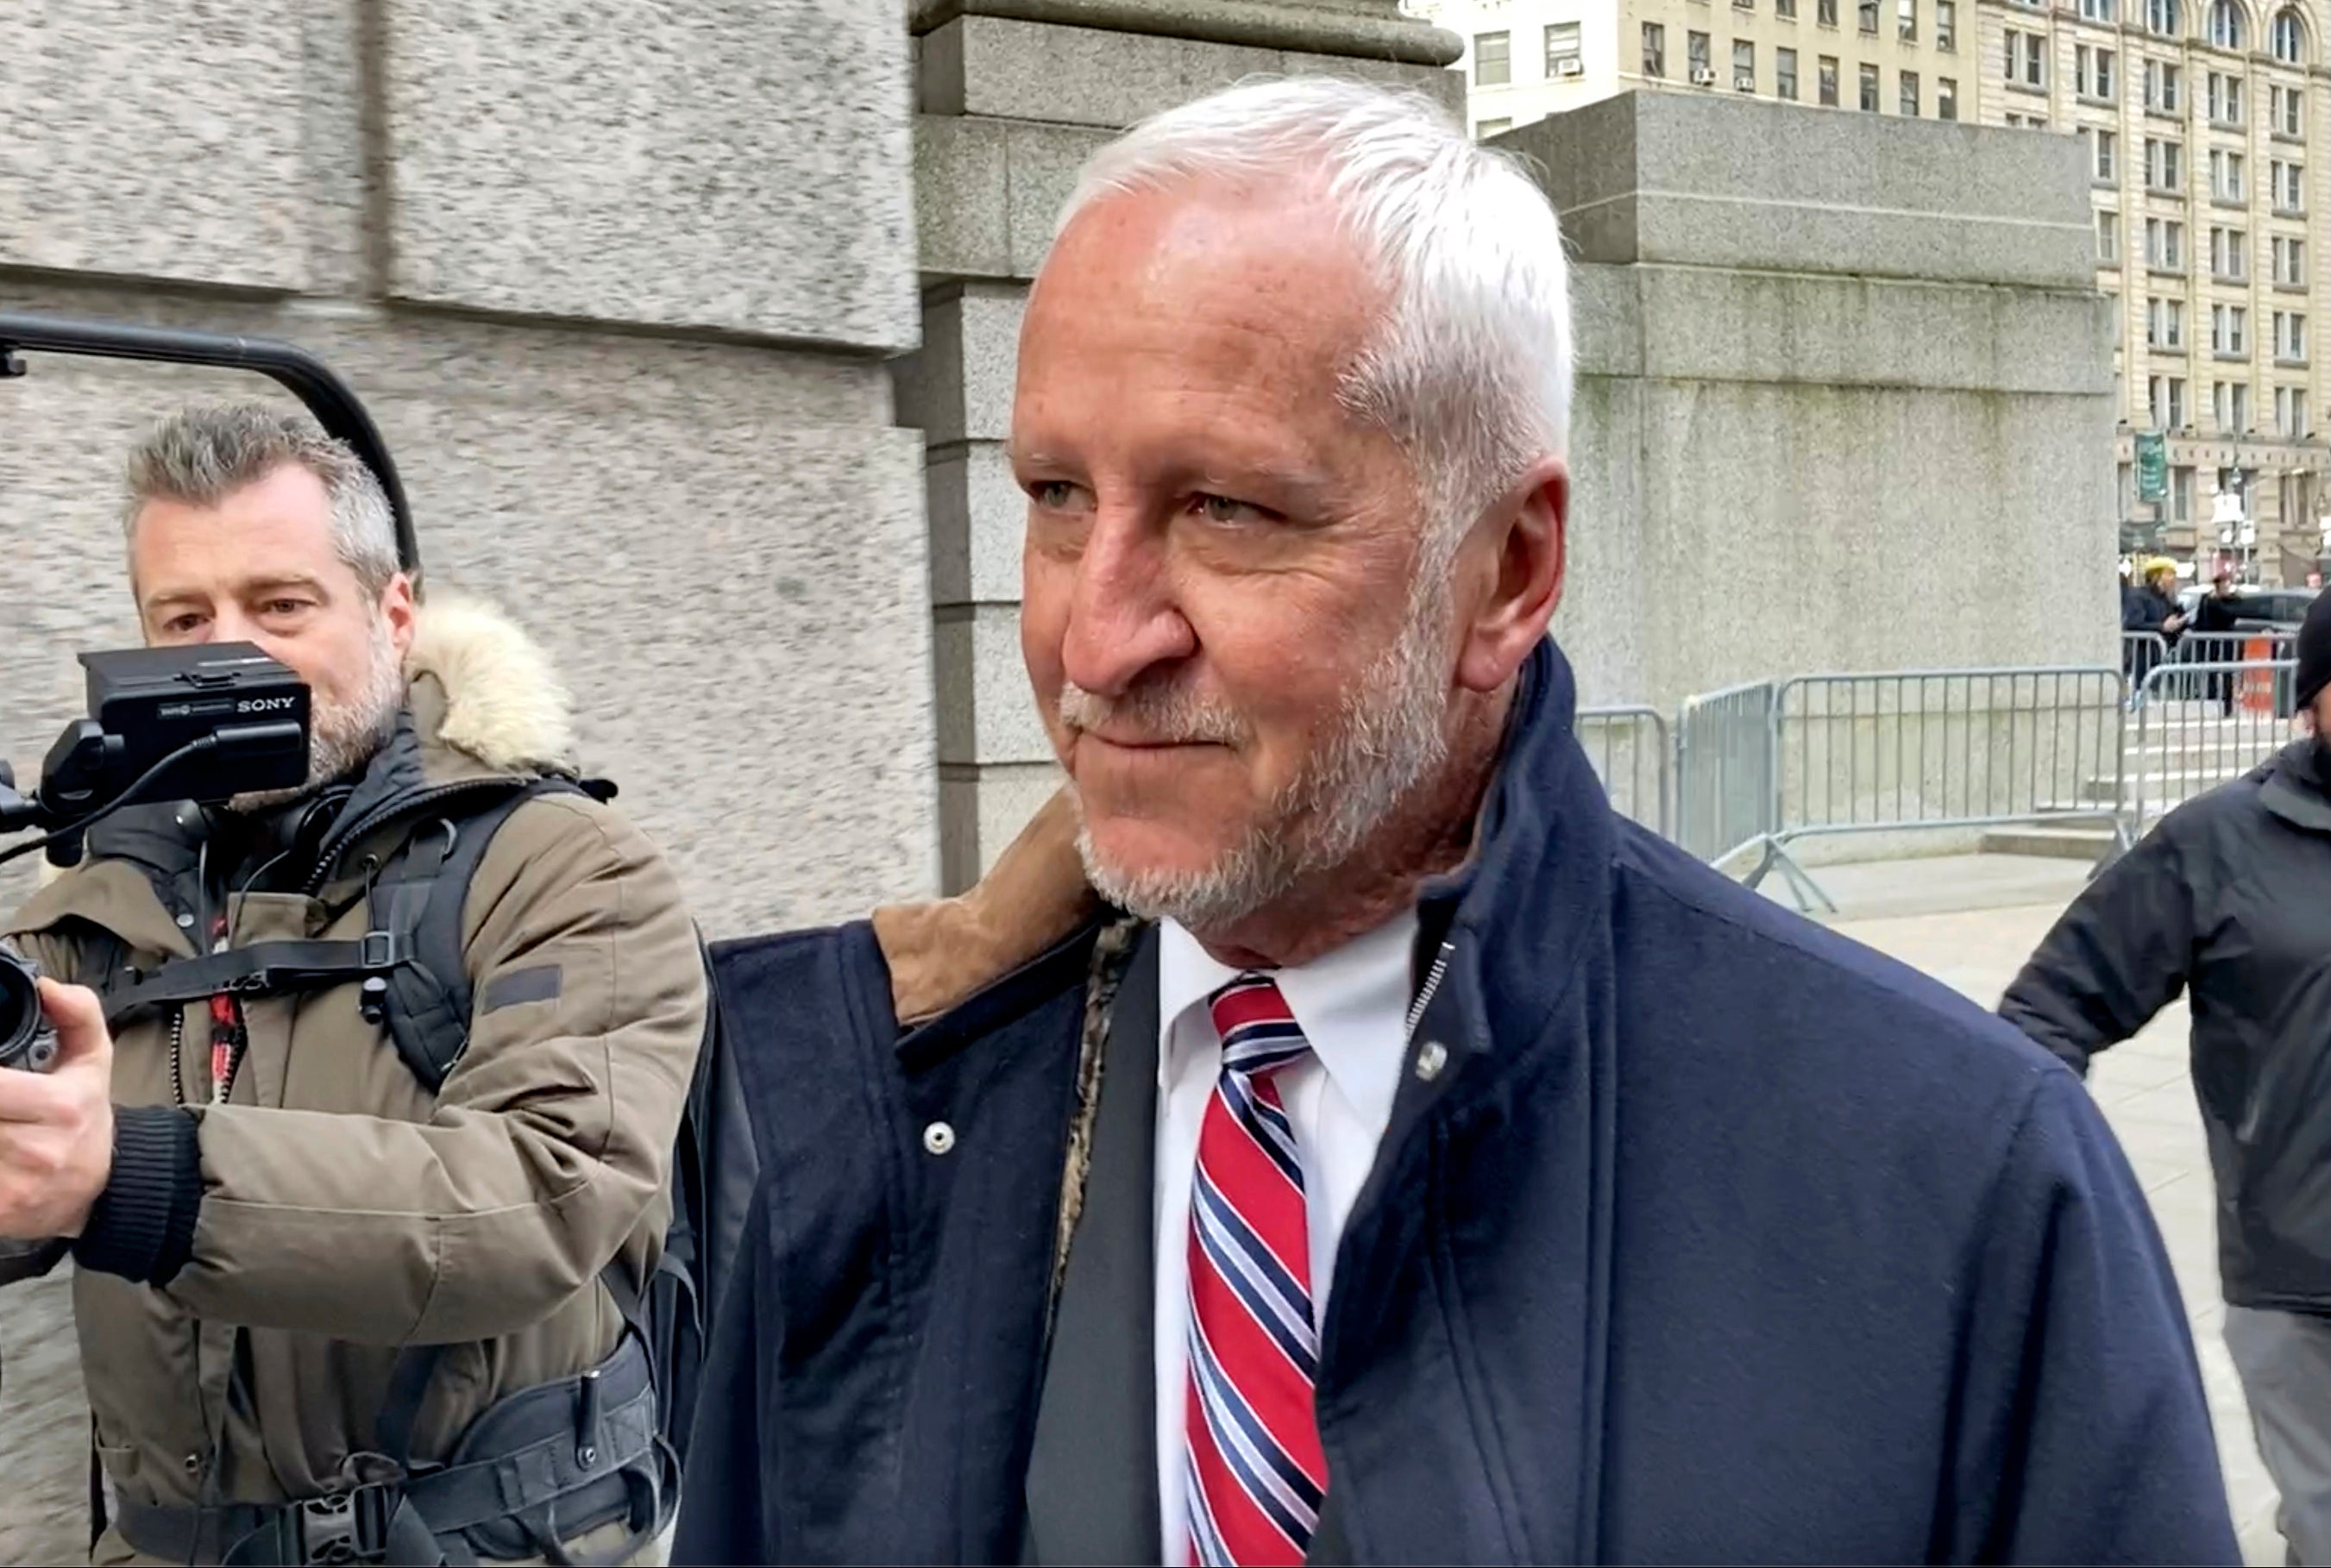 Epstein pilot Larry Visoski arriving to testify at the Manhattan federal court